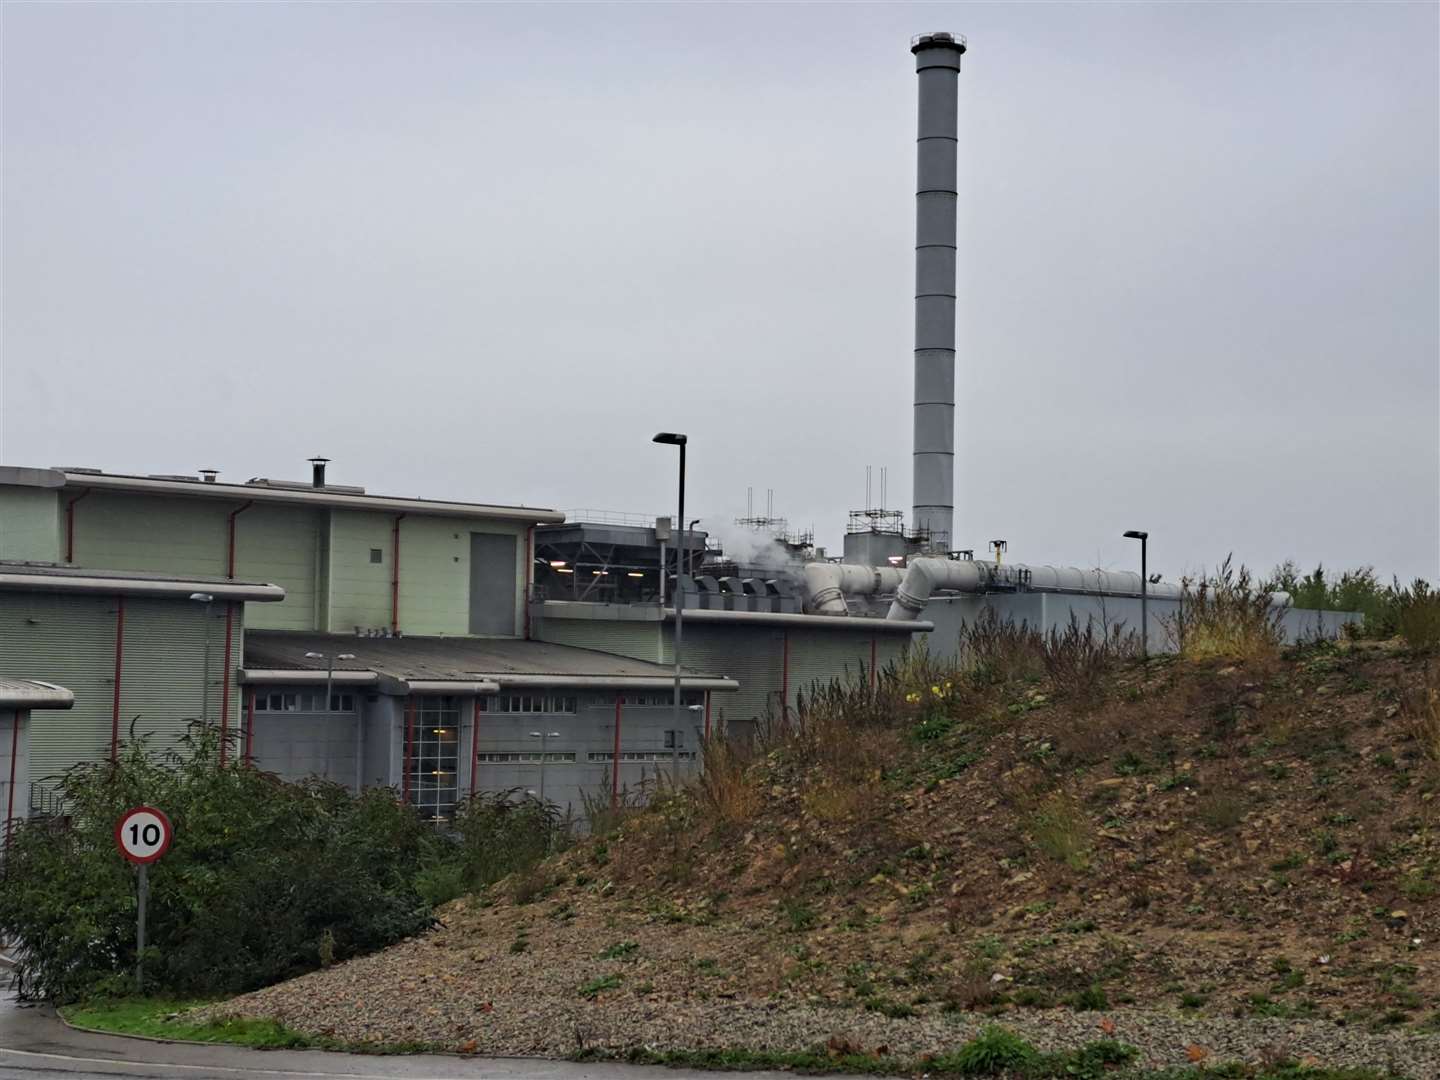 Kent Enviropower's waste incinerator at the Allington 20/20 estate